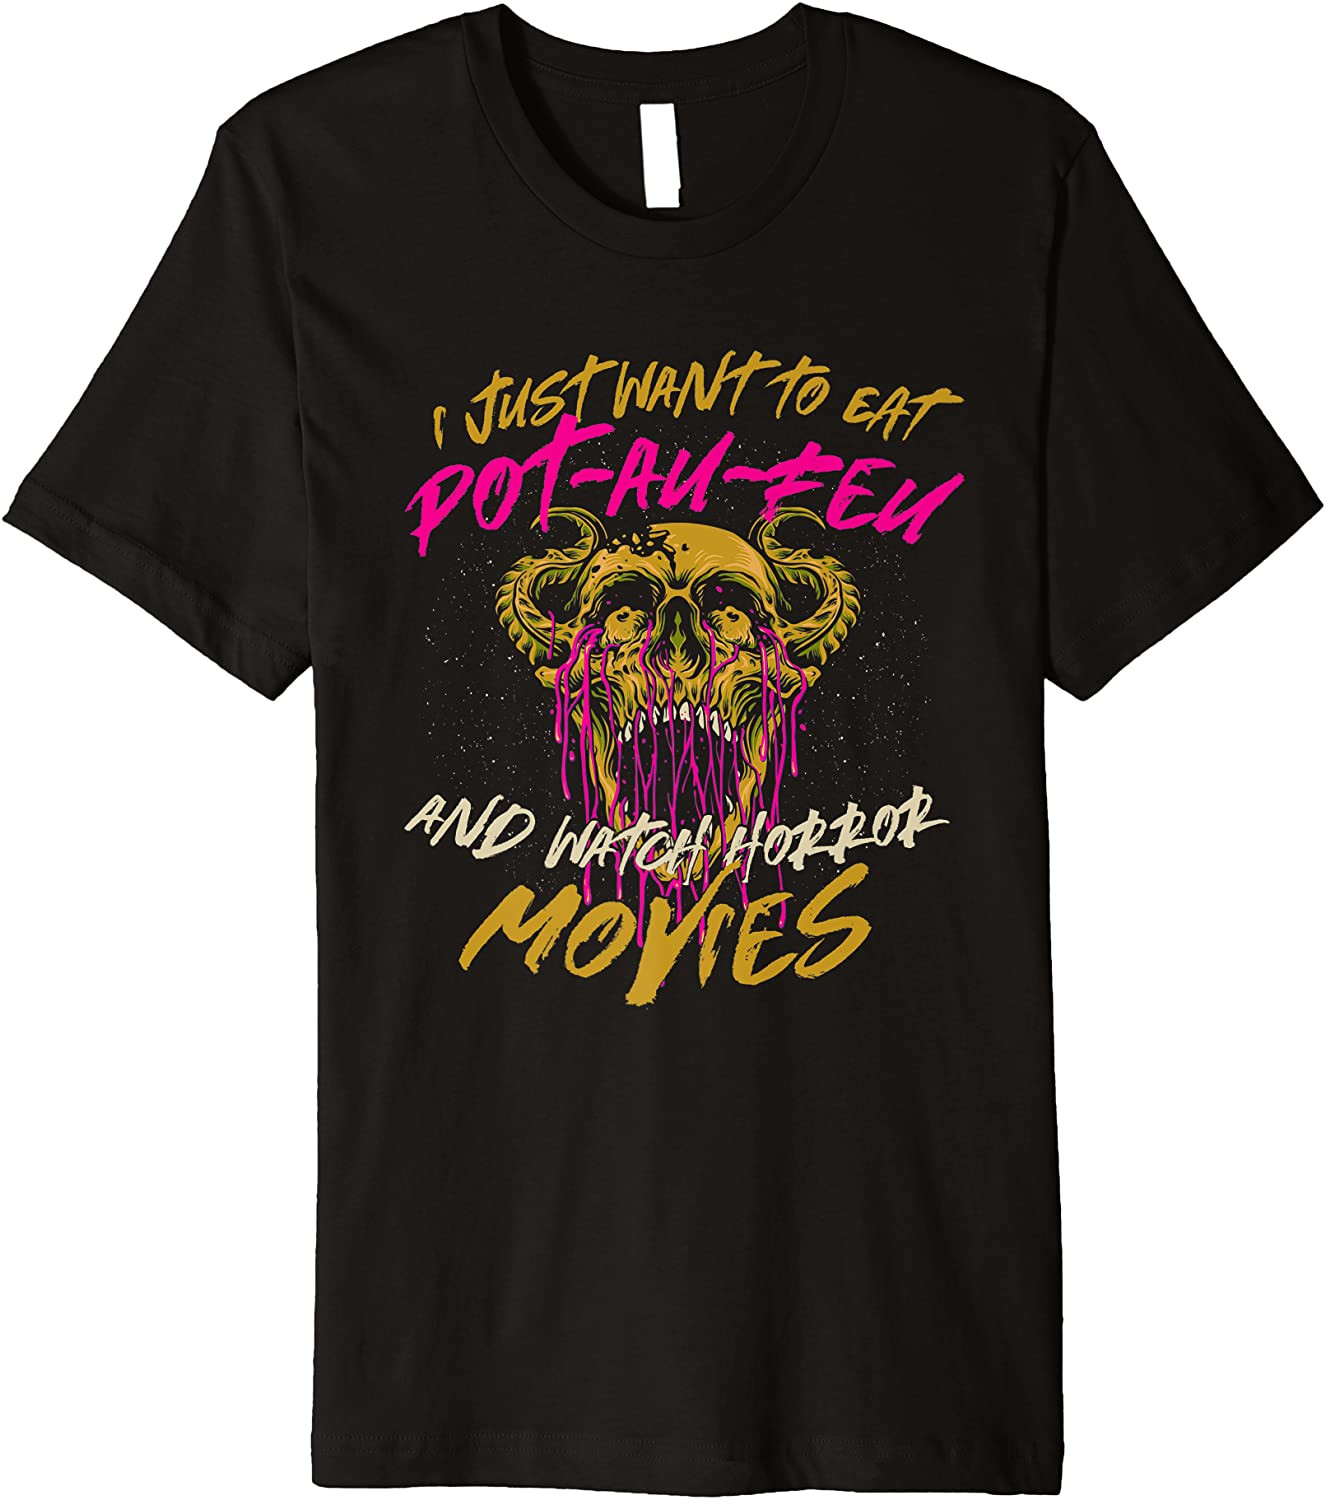 Eat Pot-Au-Feu And Watch Horror Movies Comfort Food T-Shirt